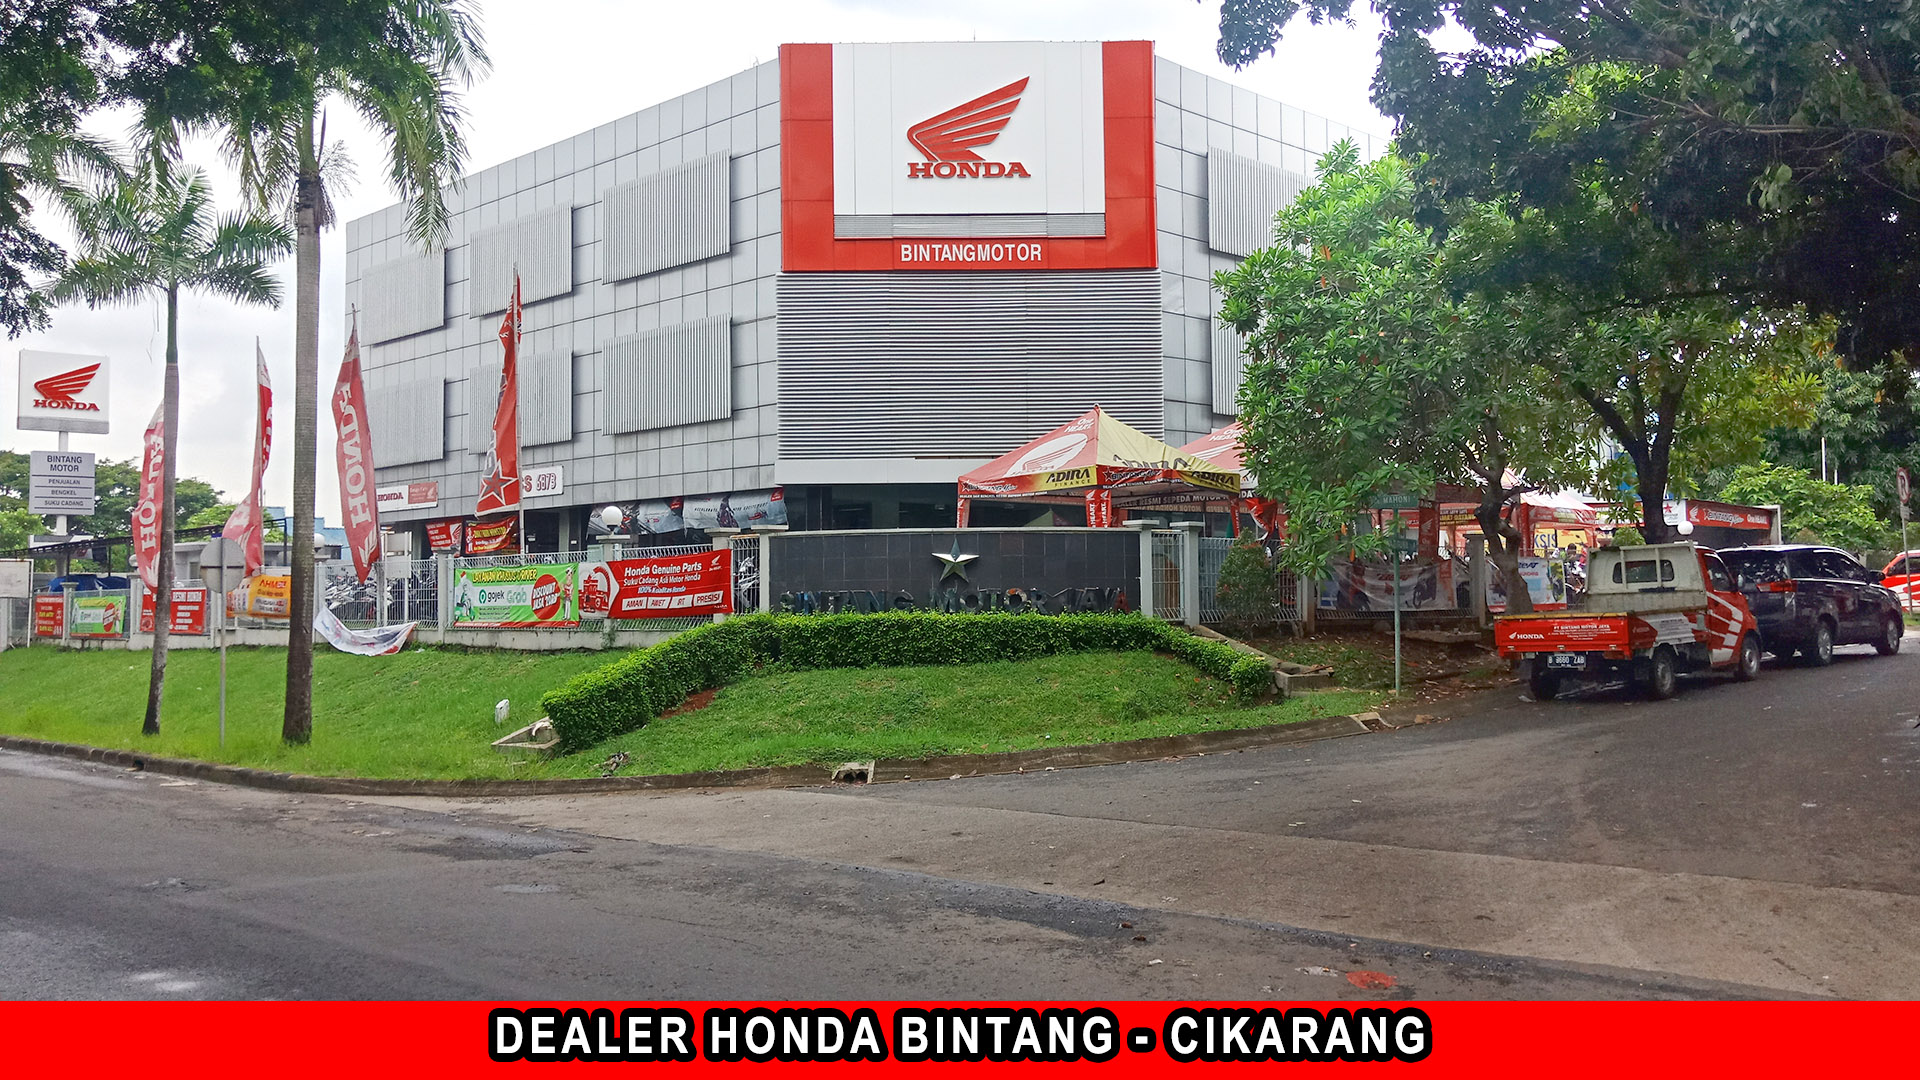  Dealer  Bintang Motor  Cabang Cikarang  Honda Bintang Motor 